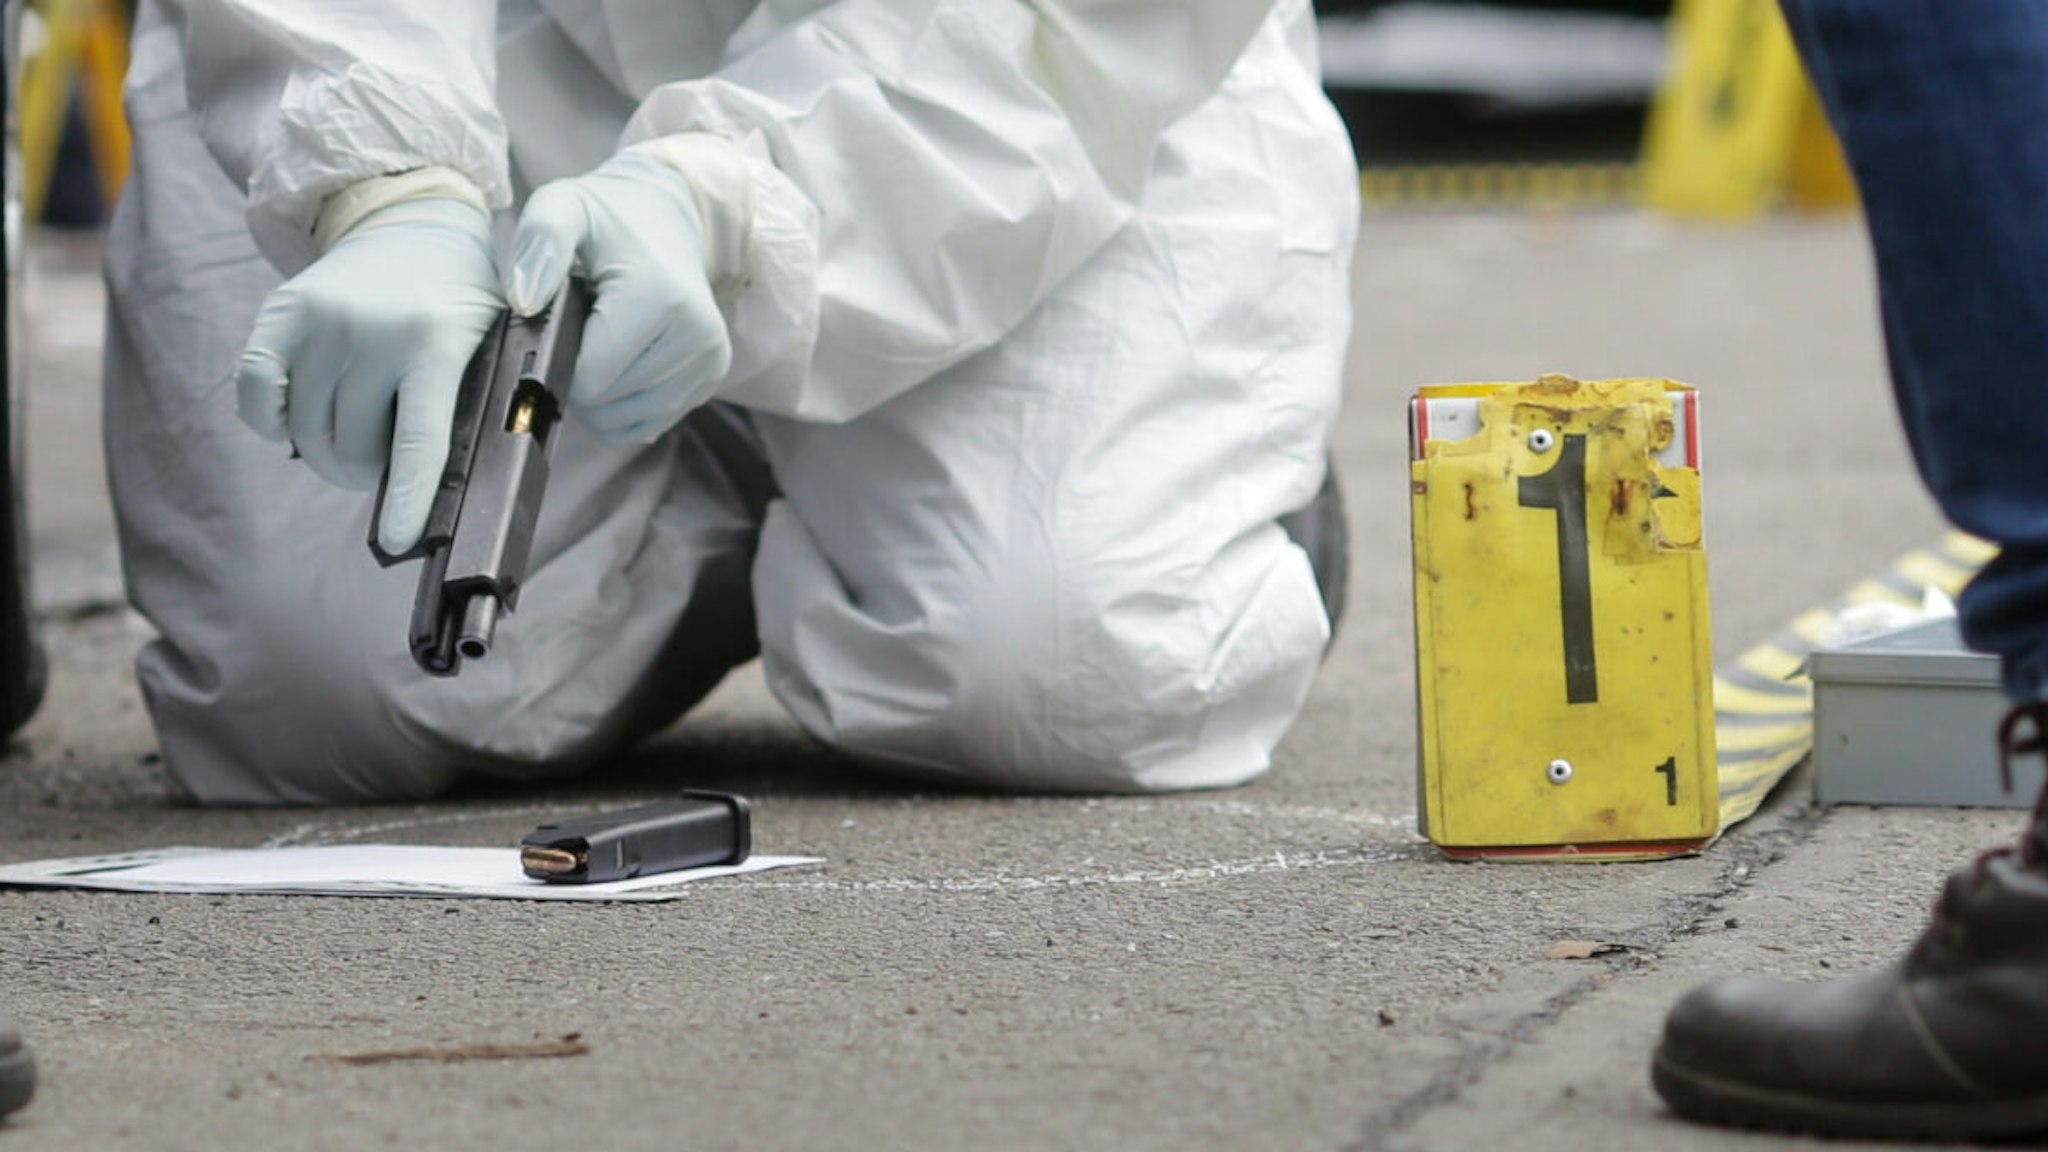 Criminal investigators inspect a handgun at a crime scene